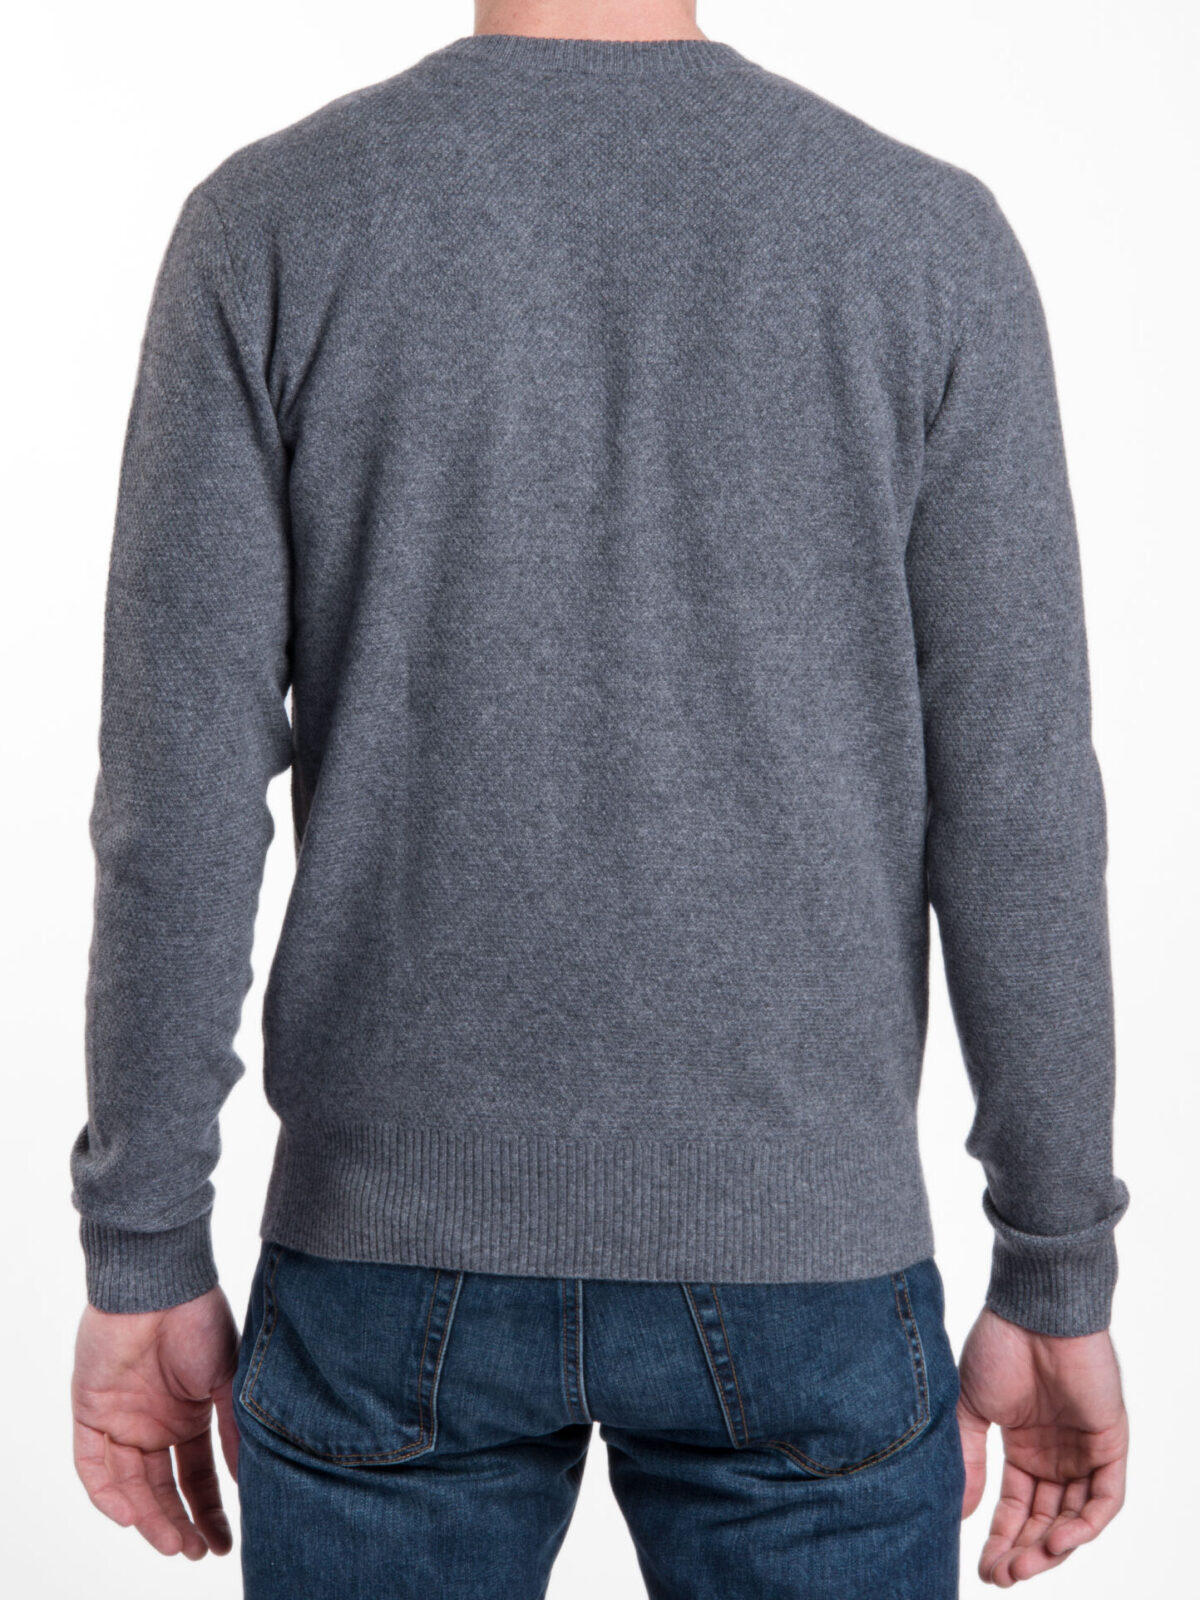 Grey Cobble Stitch Cashmere Sweater by Proper Cloth